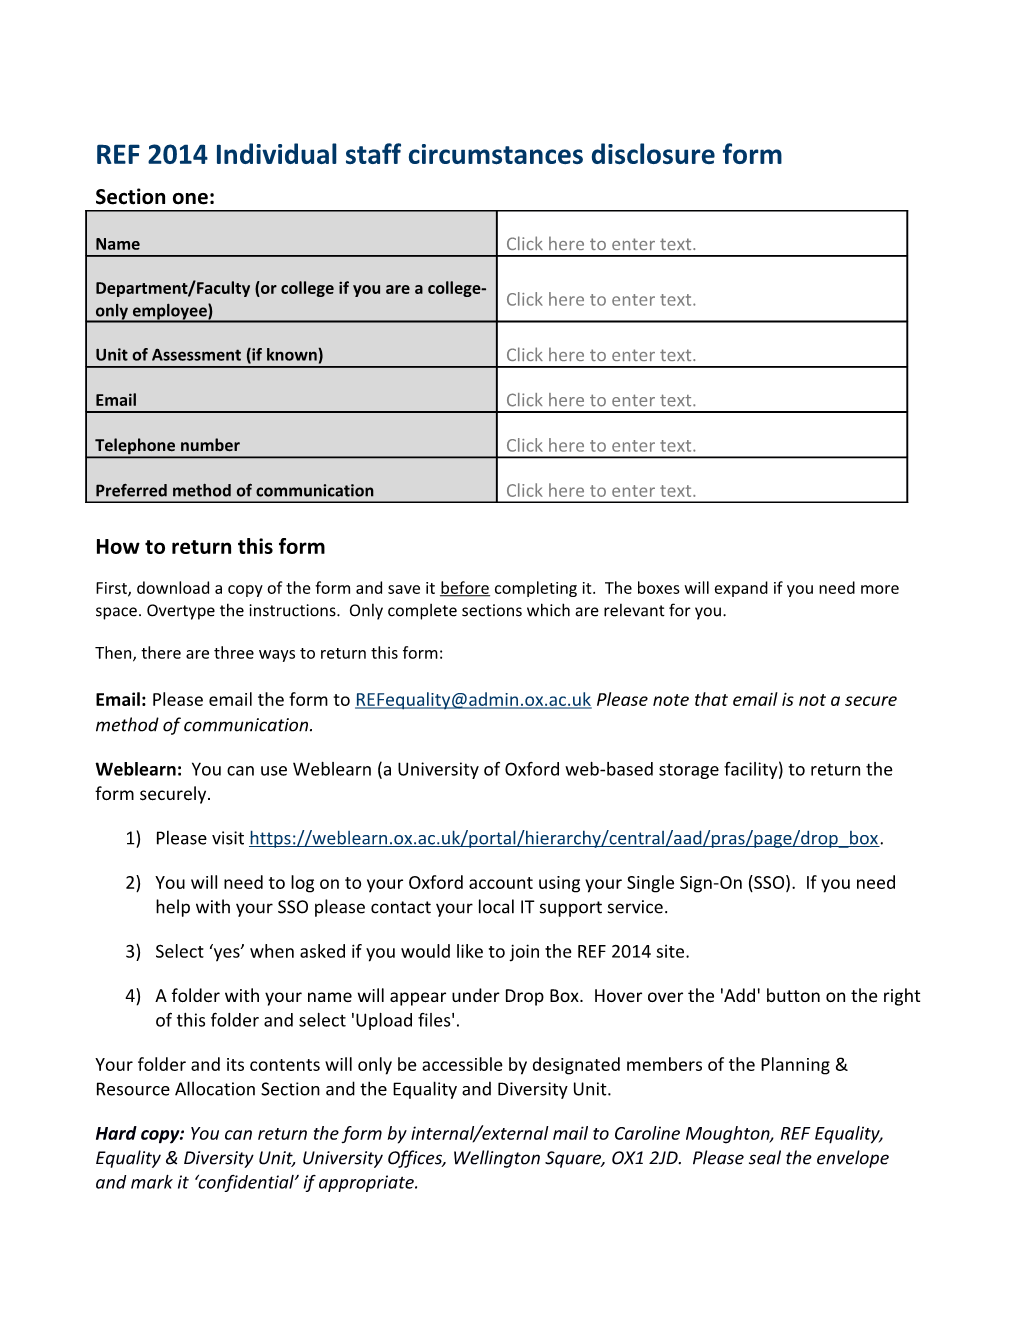 REF 2014 Individual Staff Circumstances Disclosure Form